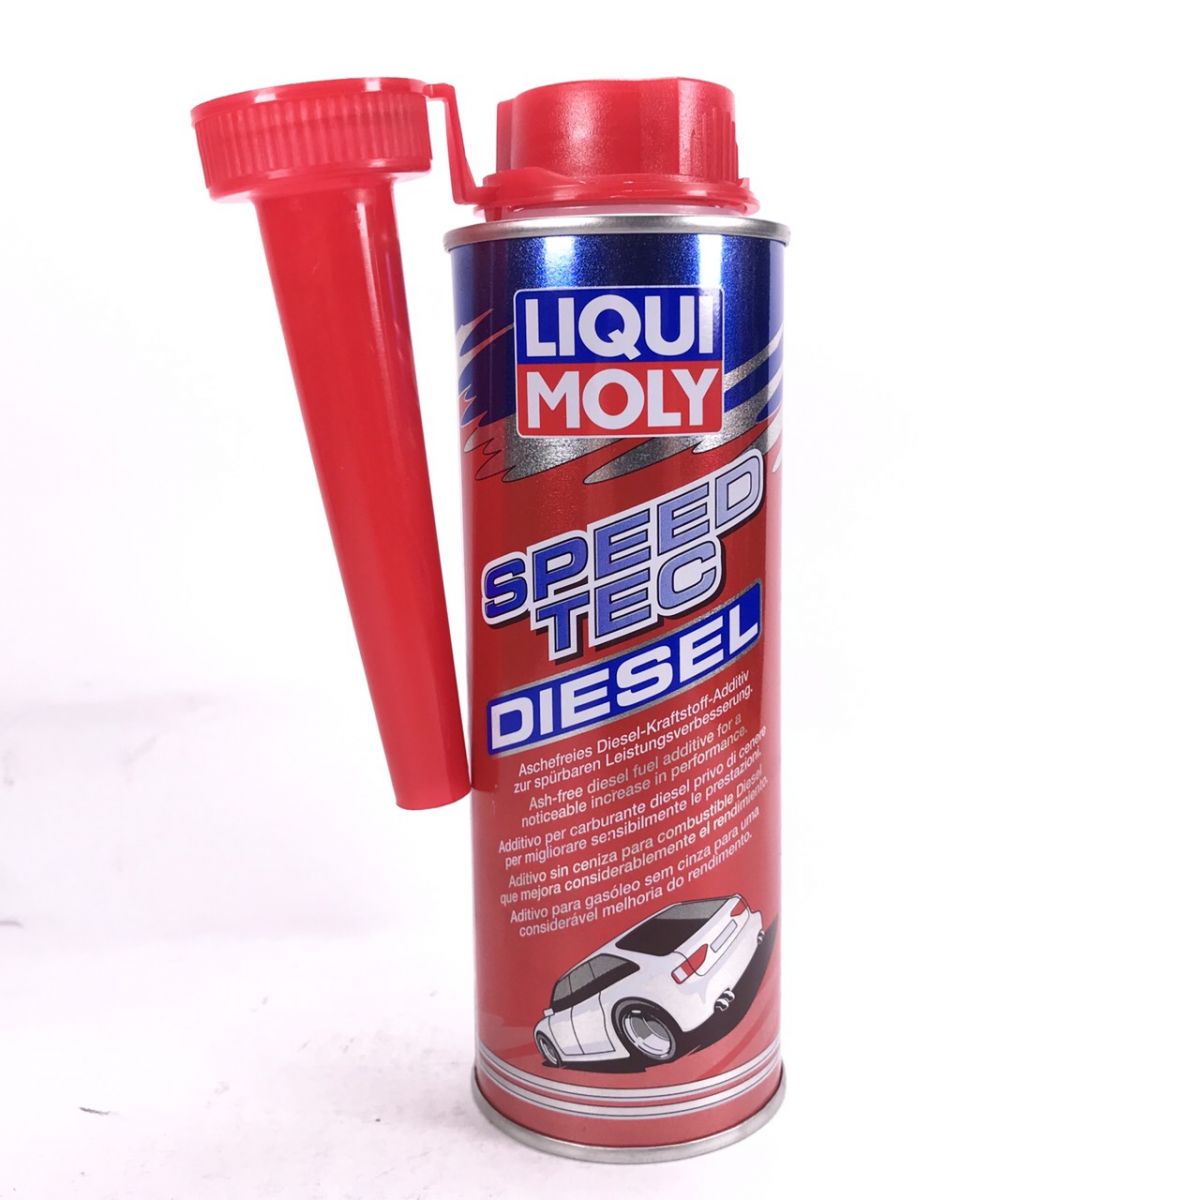 LIQUI MOLY SPEED TEC DIESEL No.3722 柴油精-機油倉庫商務平台